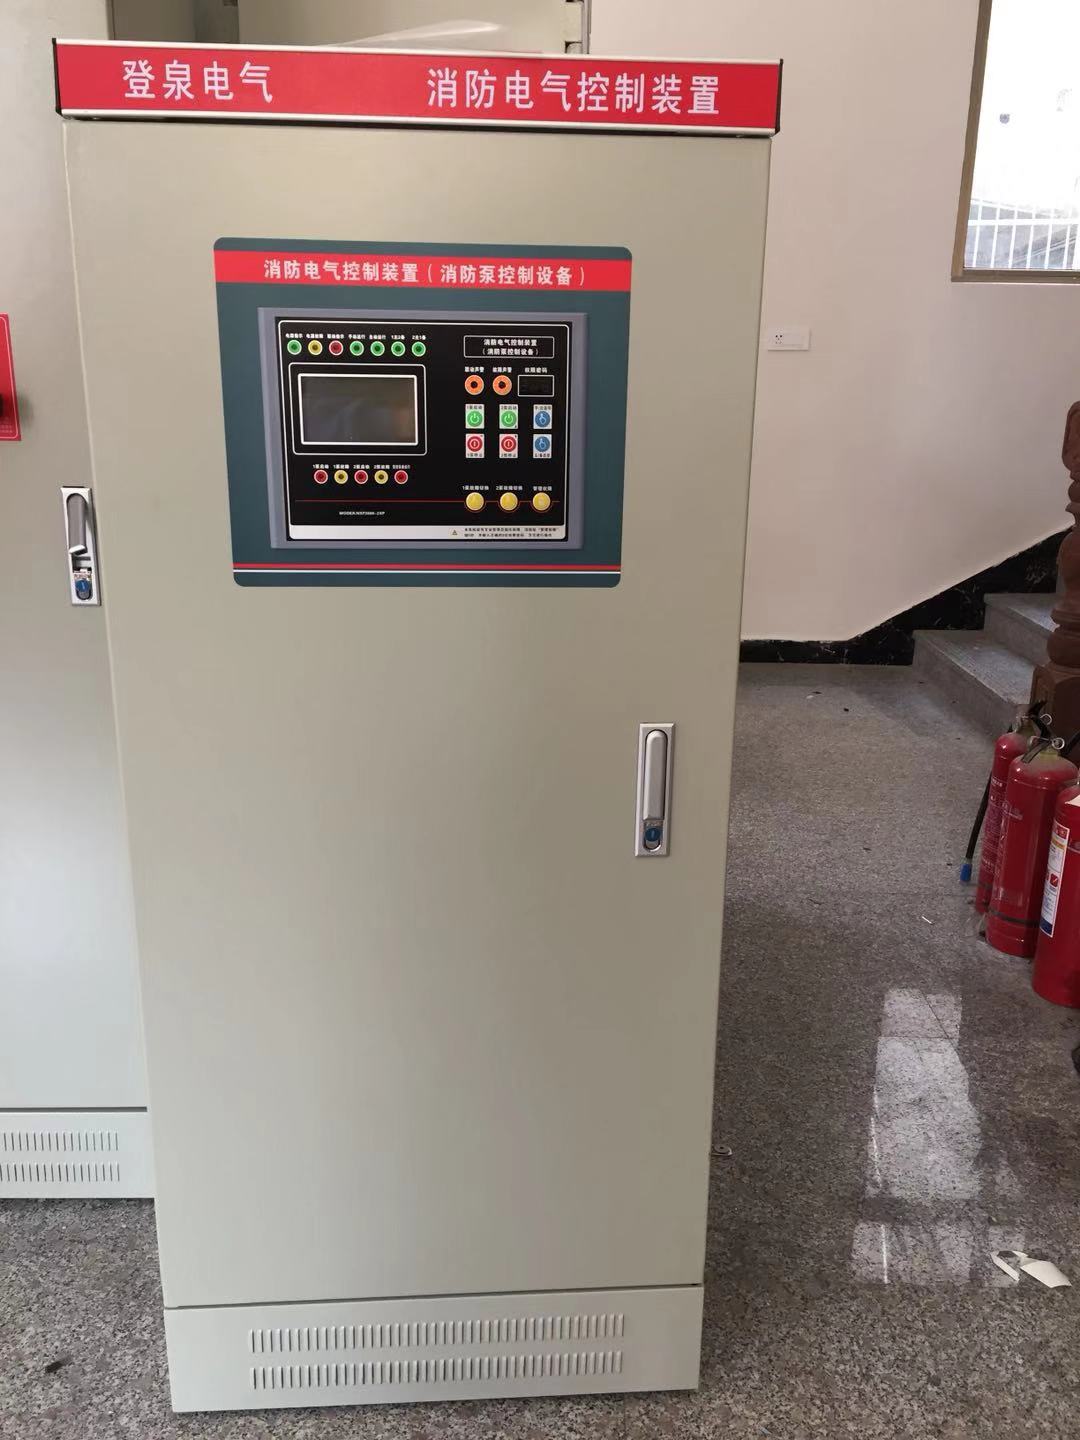 CCCF消防水泵控制柜，星三角降压启动控制柜，22 KW水泵控制柜一用一备，消防电气控制设备，